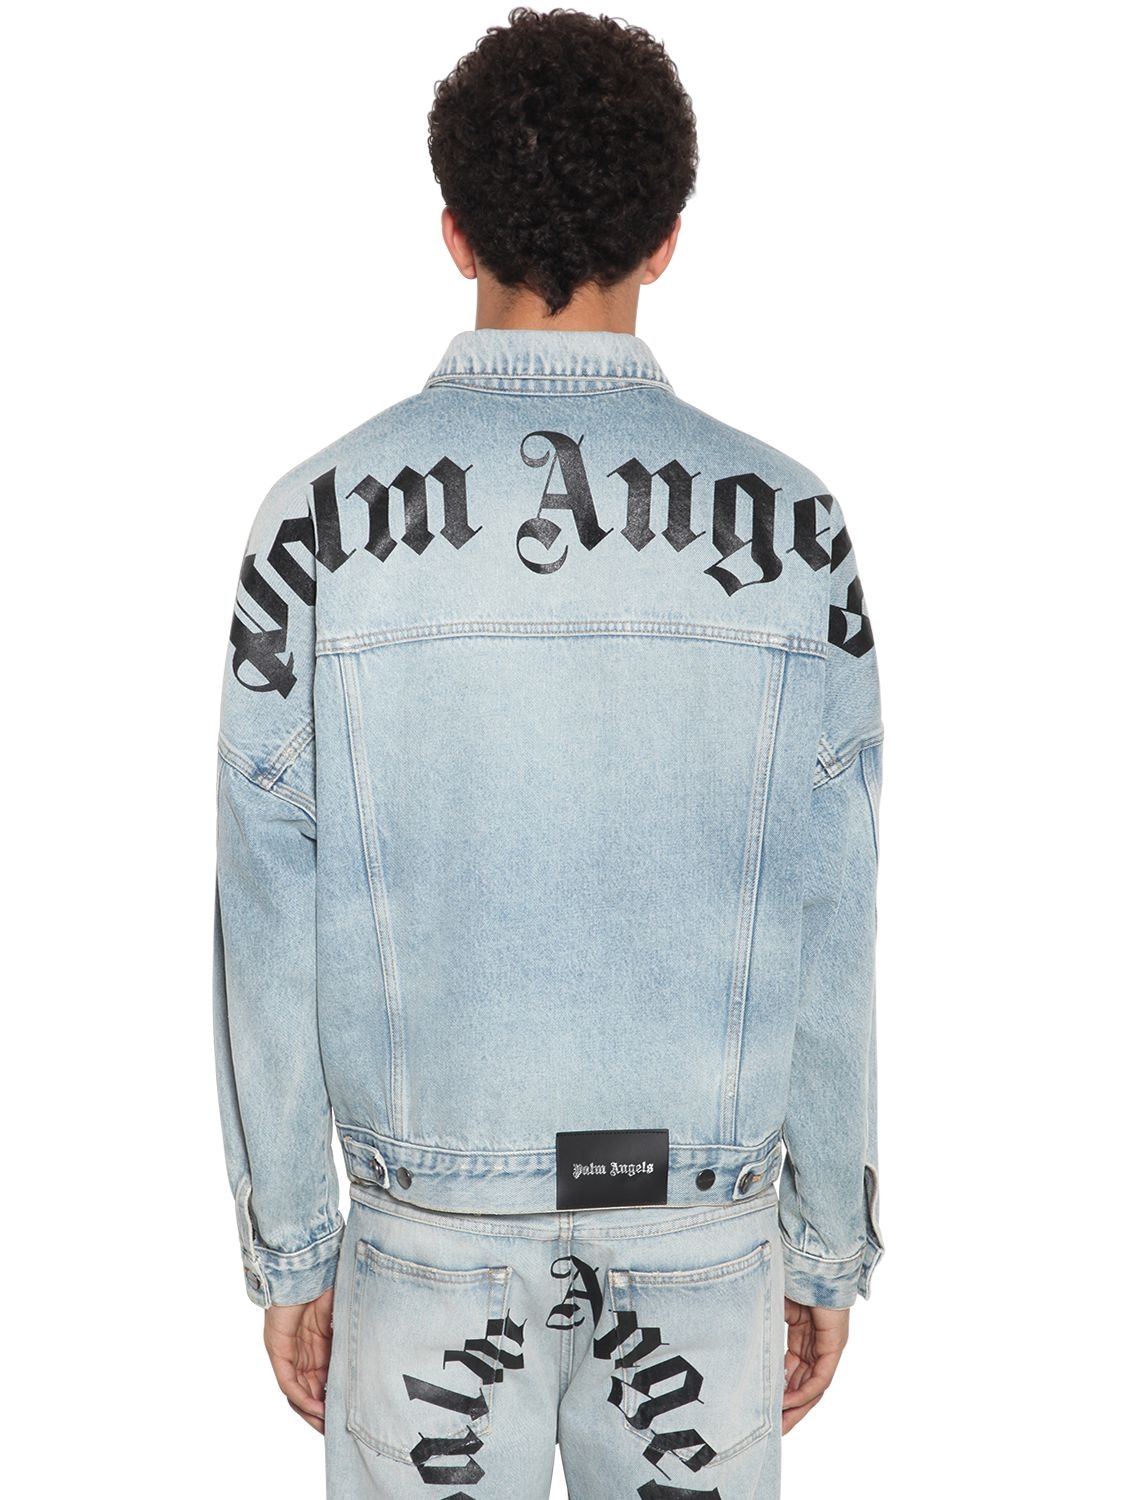 palm angels jeans jacket